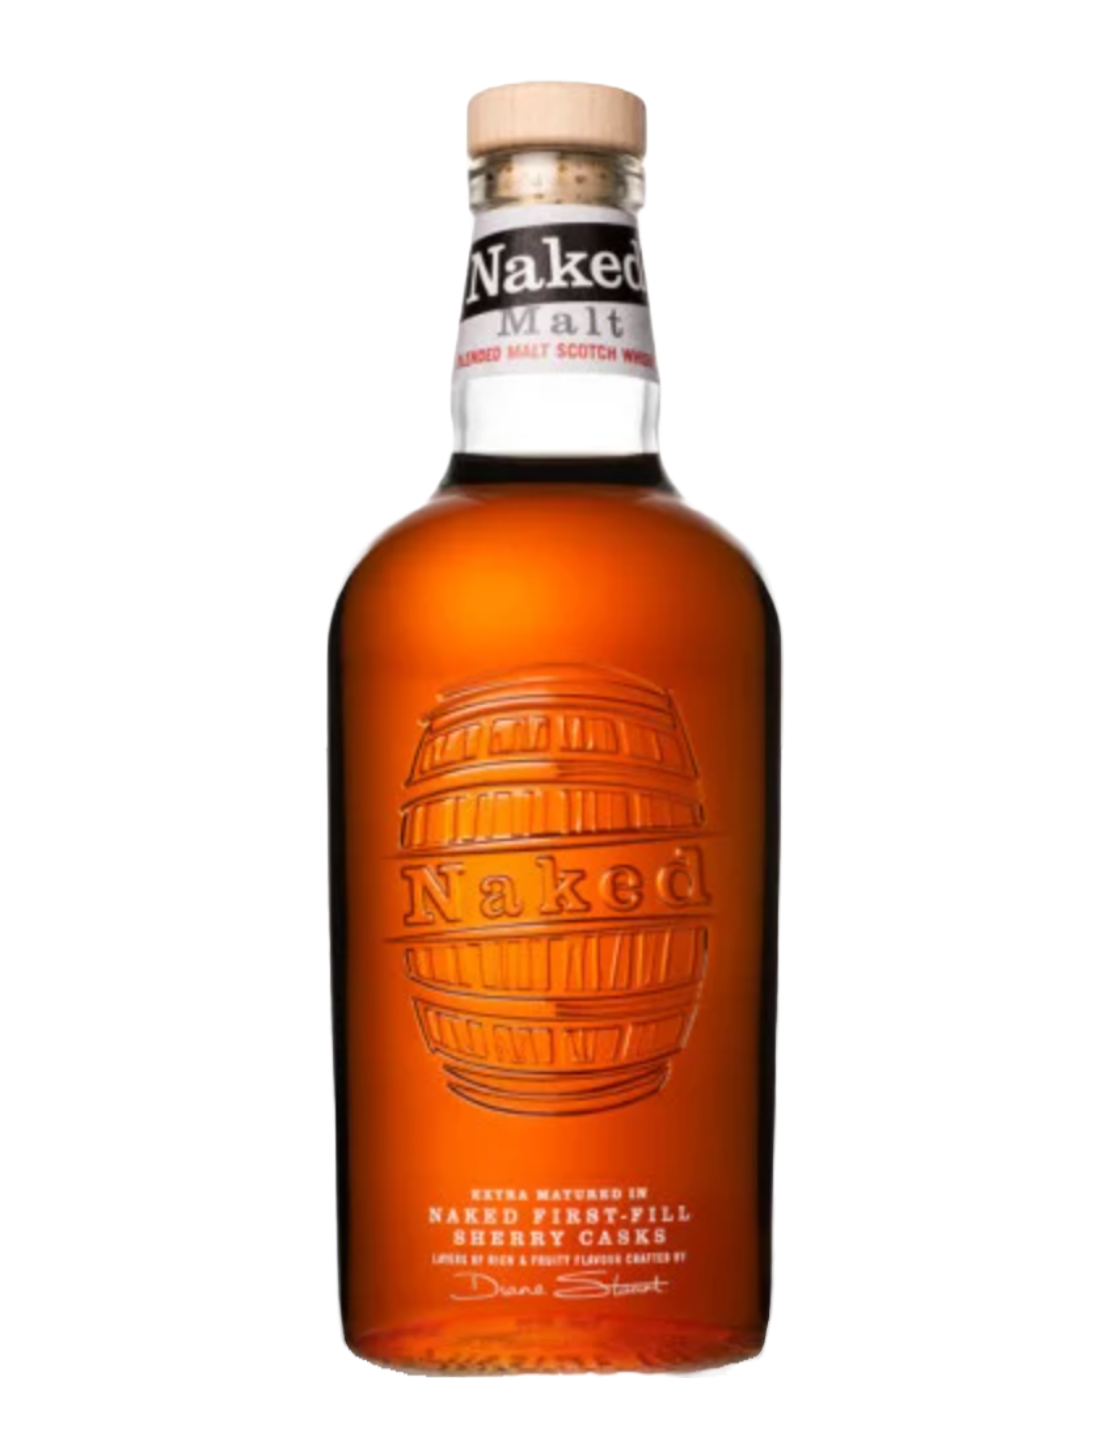 An elegant bottle of Naked Malt Blended Malt Scotch in front of a plain white background